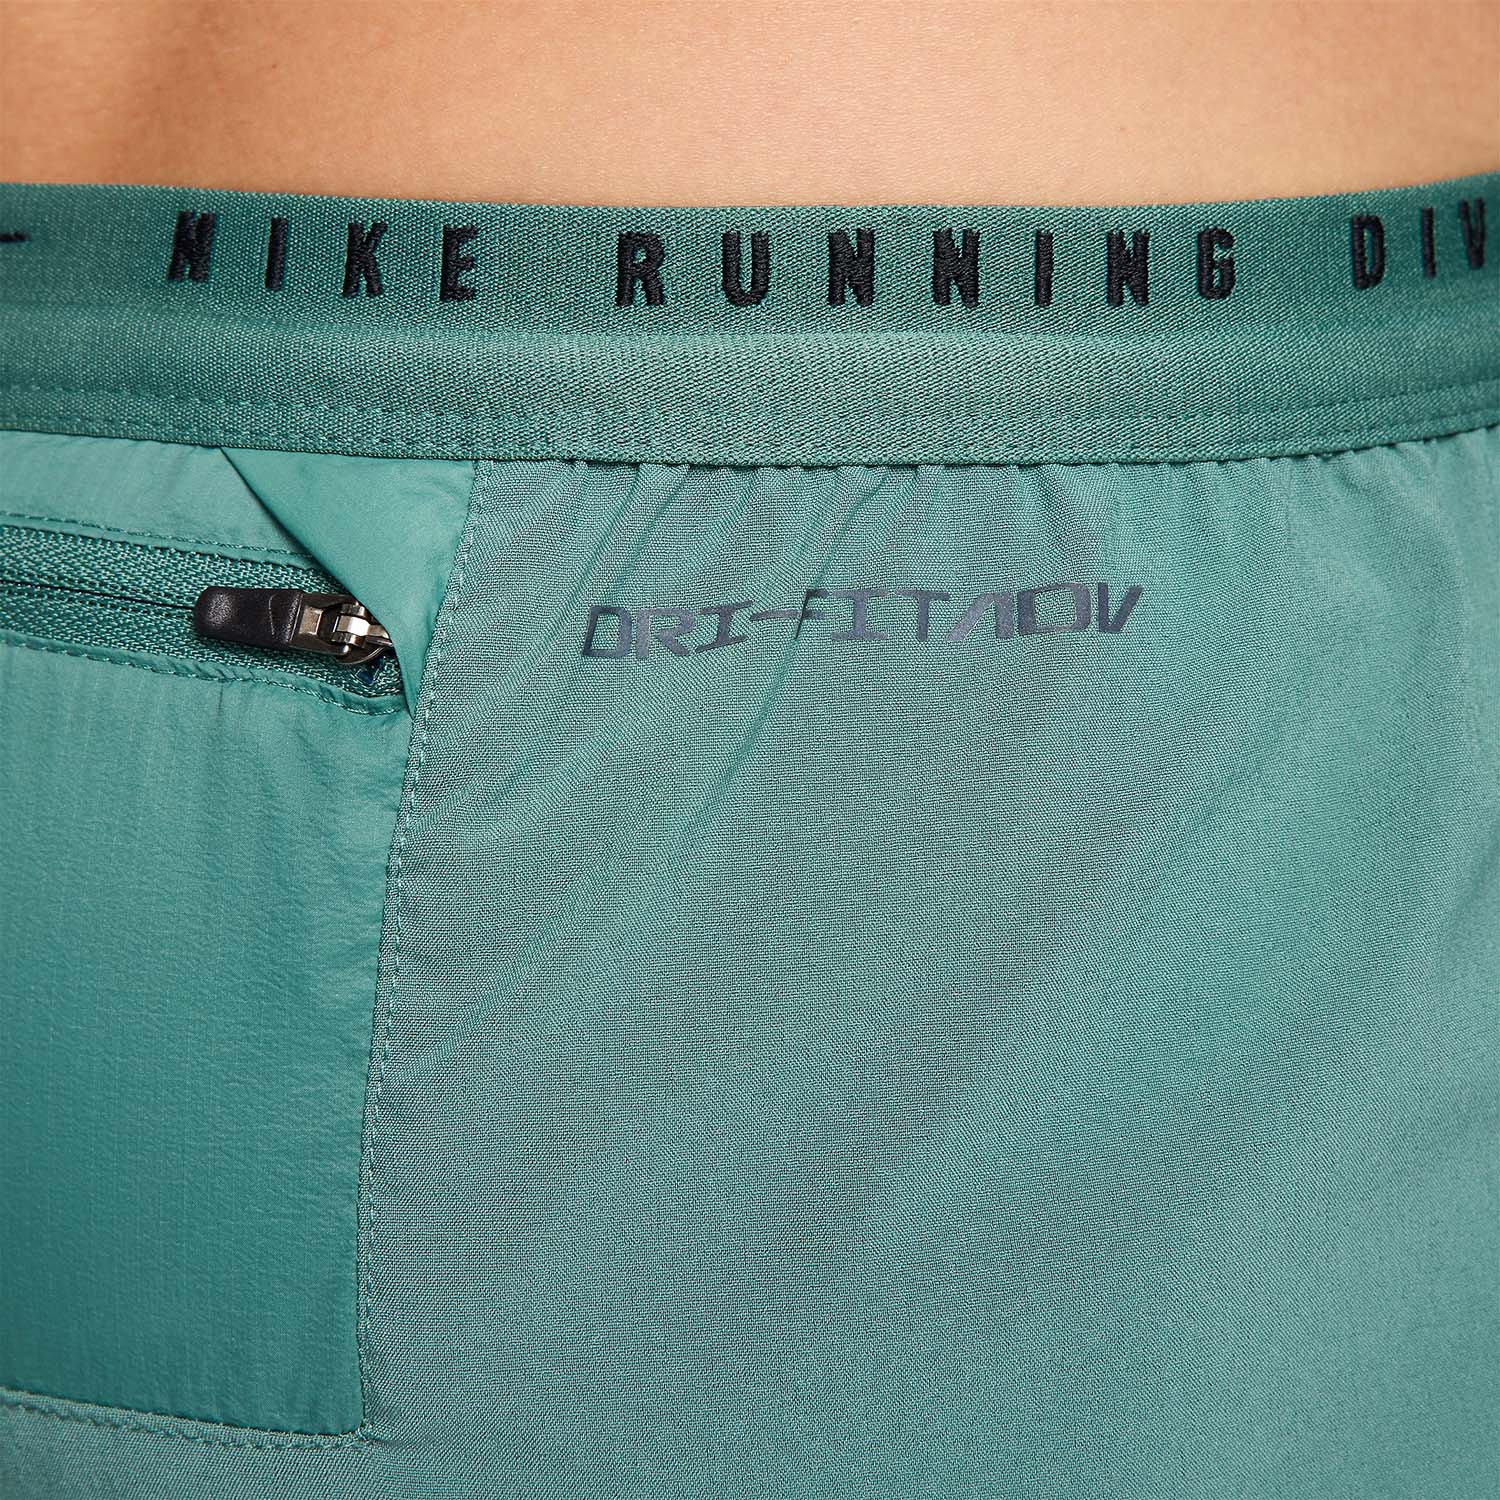 Nike Dri-FIT ADV Pantalones - Bicoastal/Black